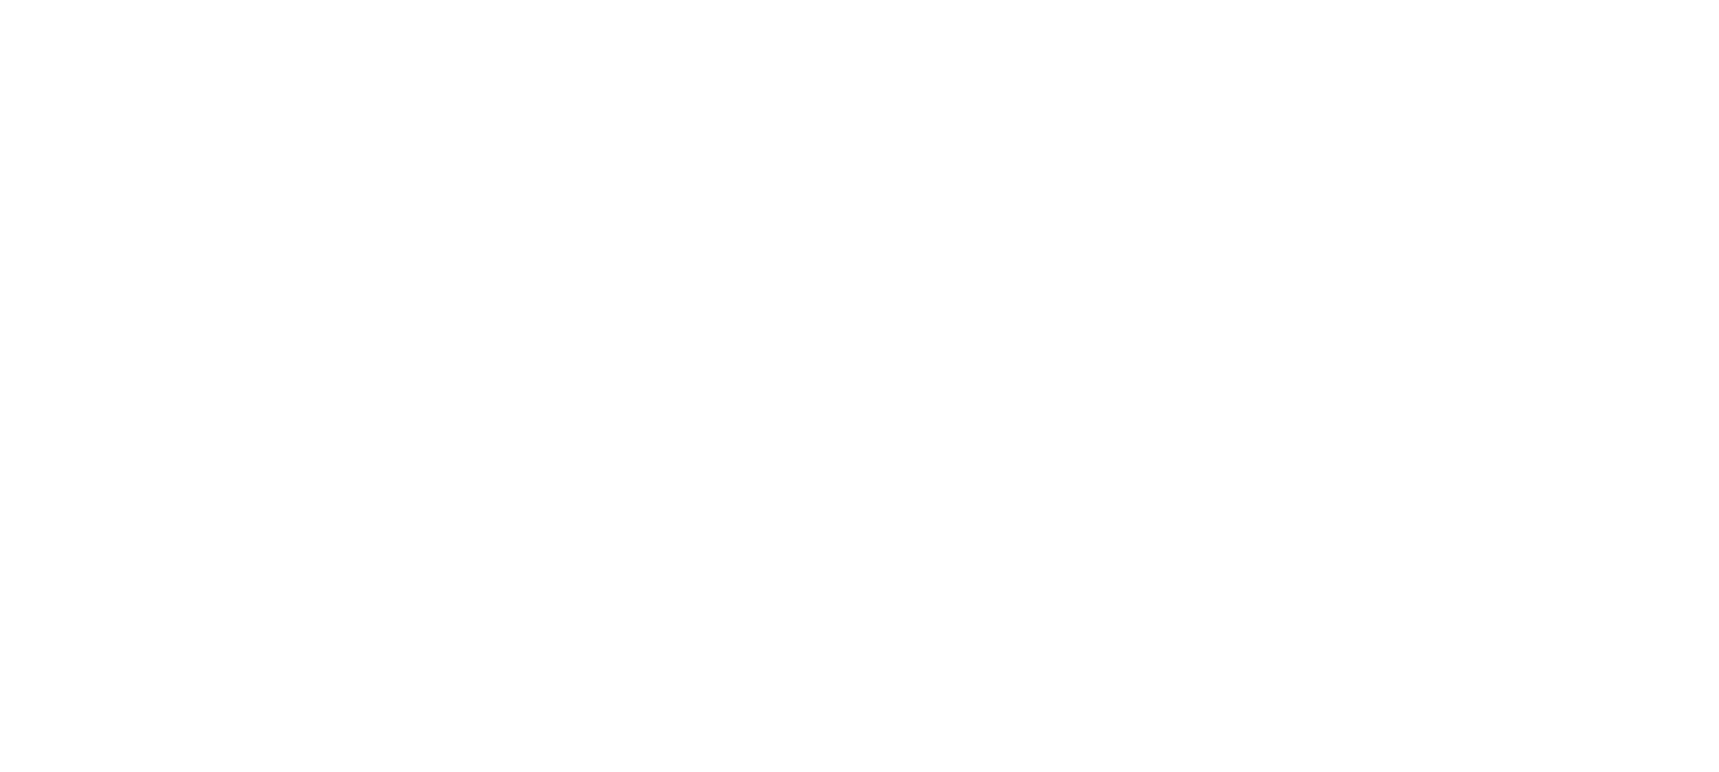 Creating Pathway to Better Communication, Mutual Understanding